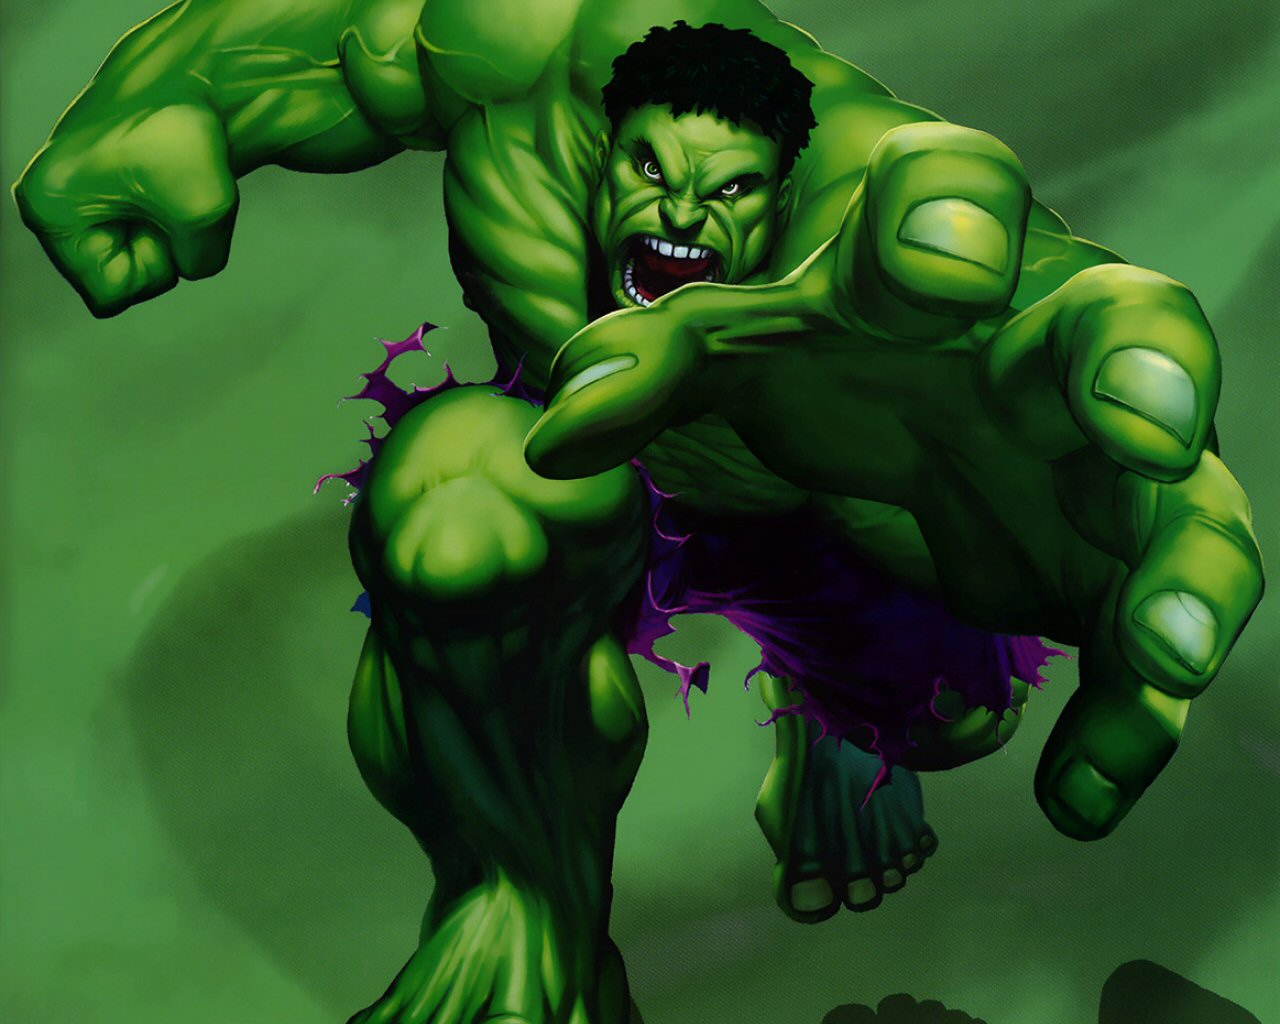 Passe a guarda laçada ao estilo "Hulk" no Jiu-Jitsu | Graciemag